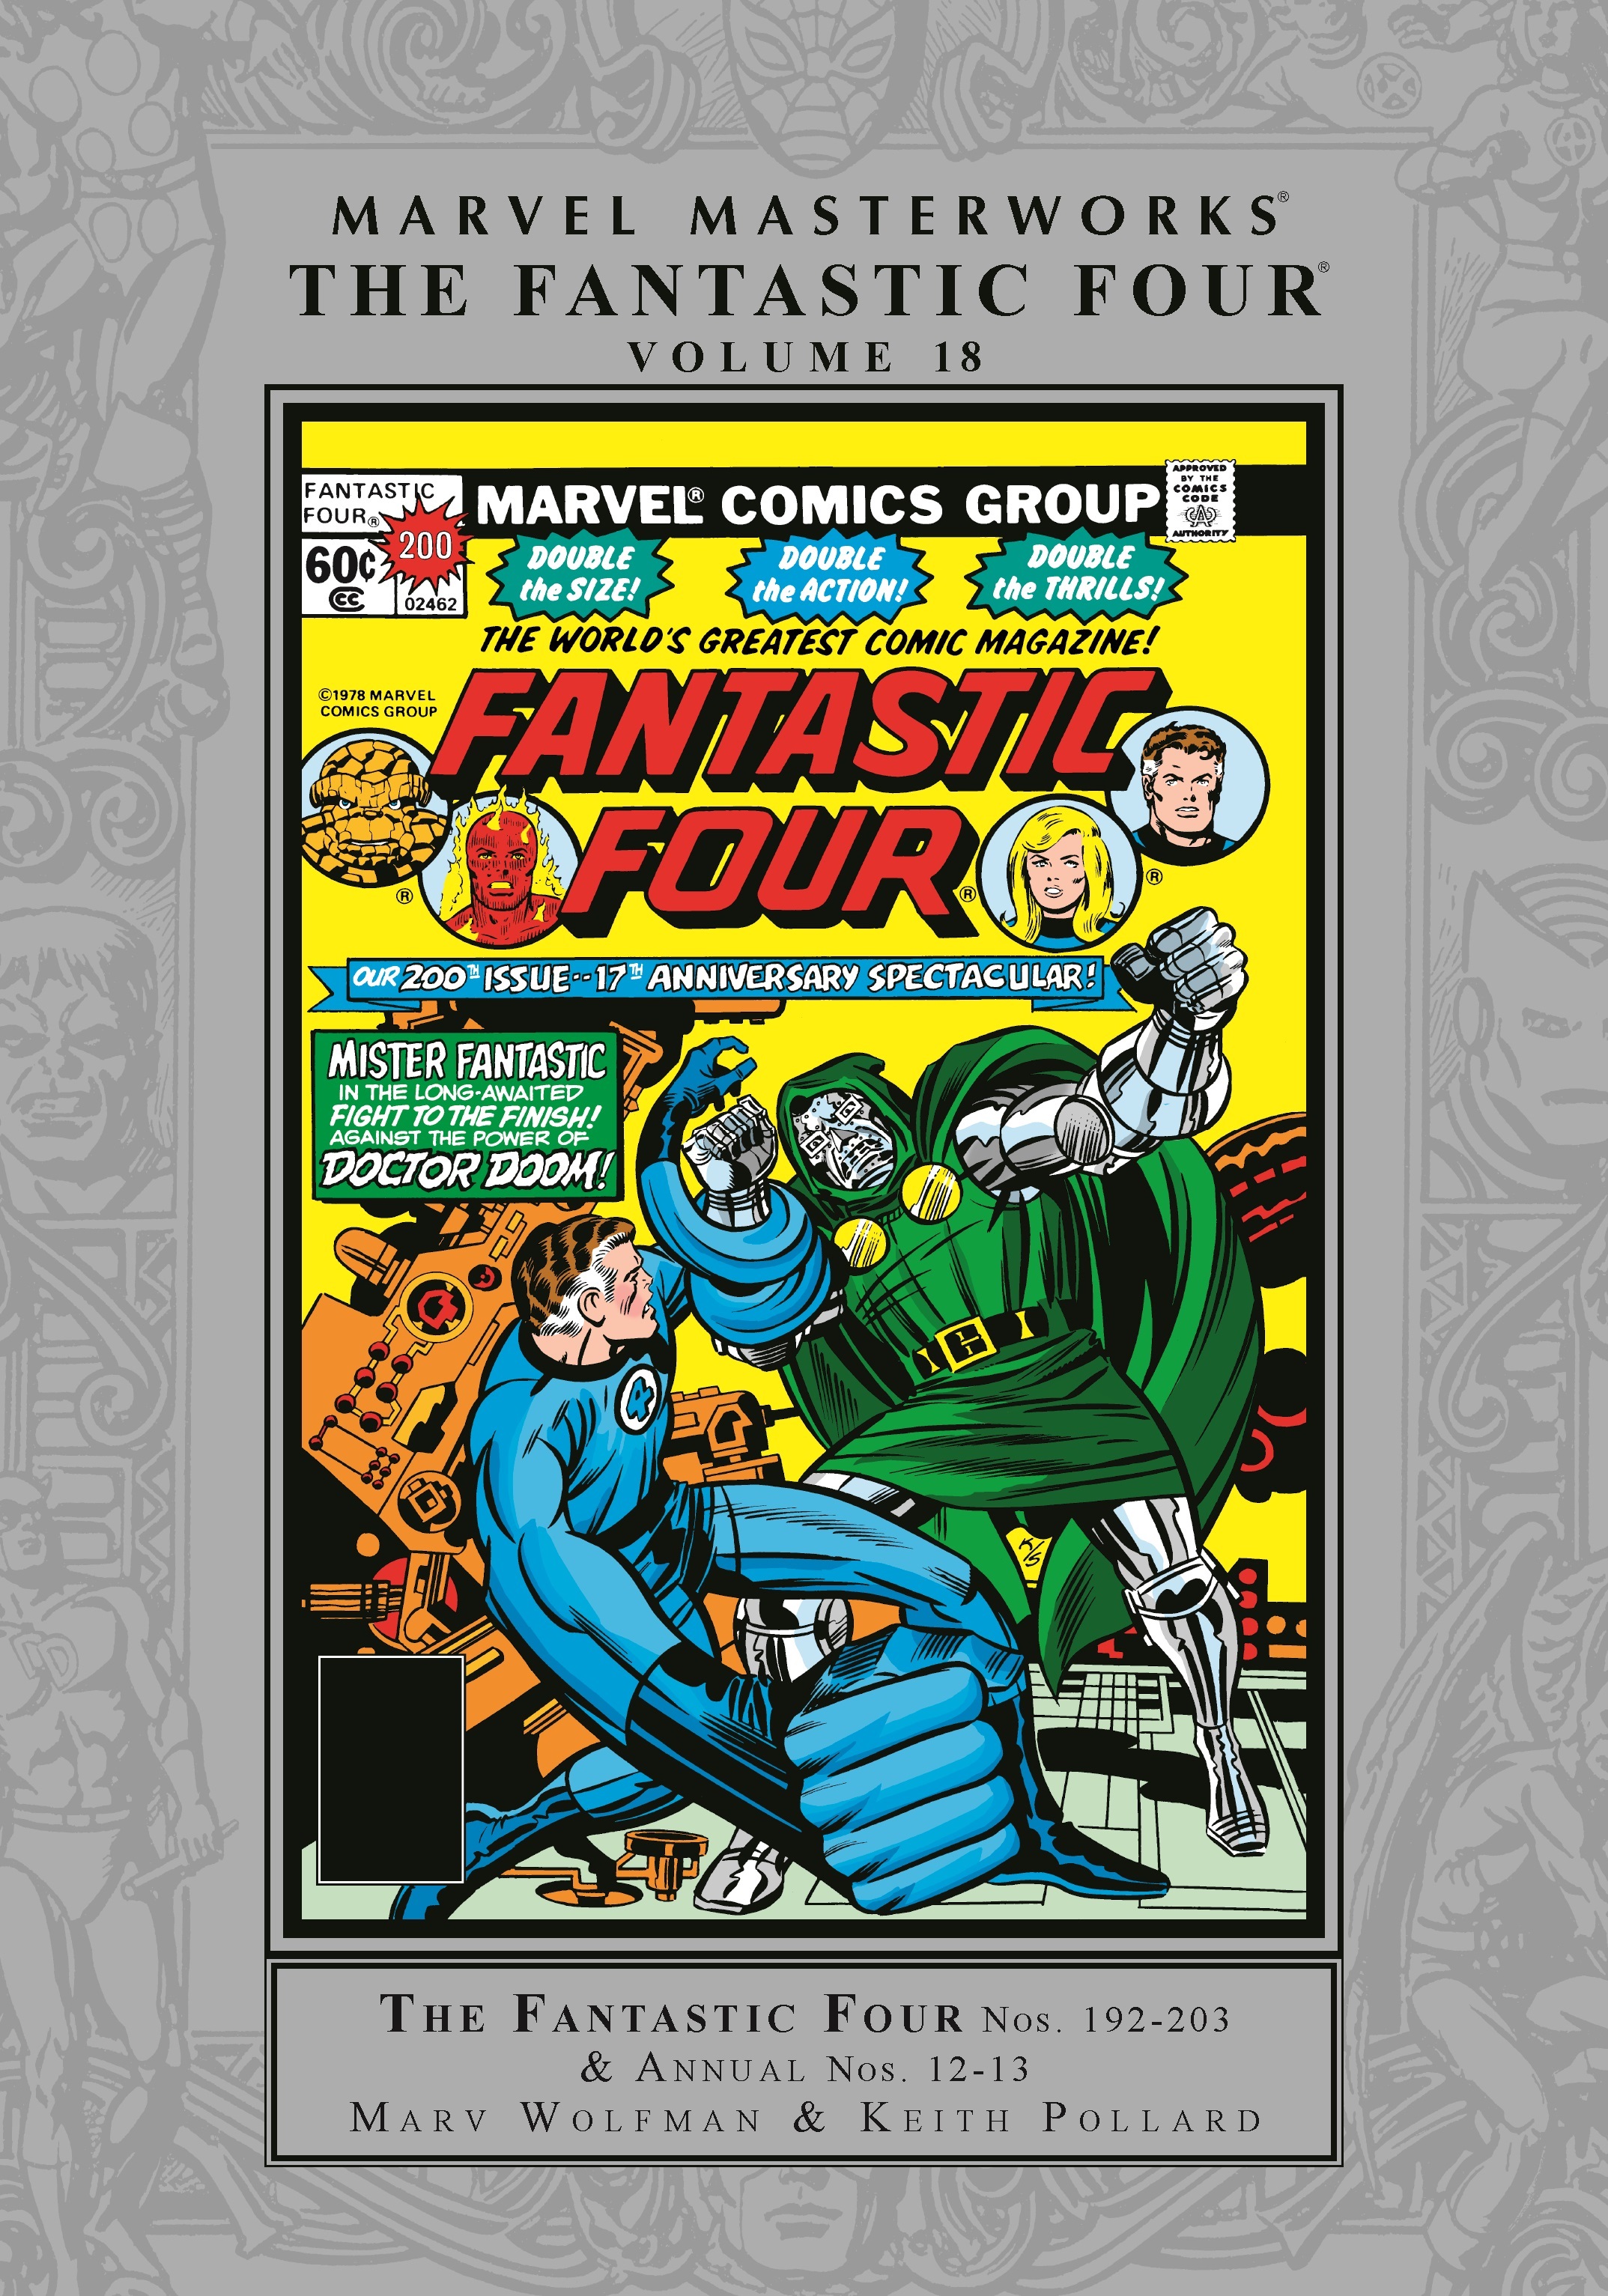 Marvel Masterworks: The Fantastic Four Vol. 18 (Hardcover)